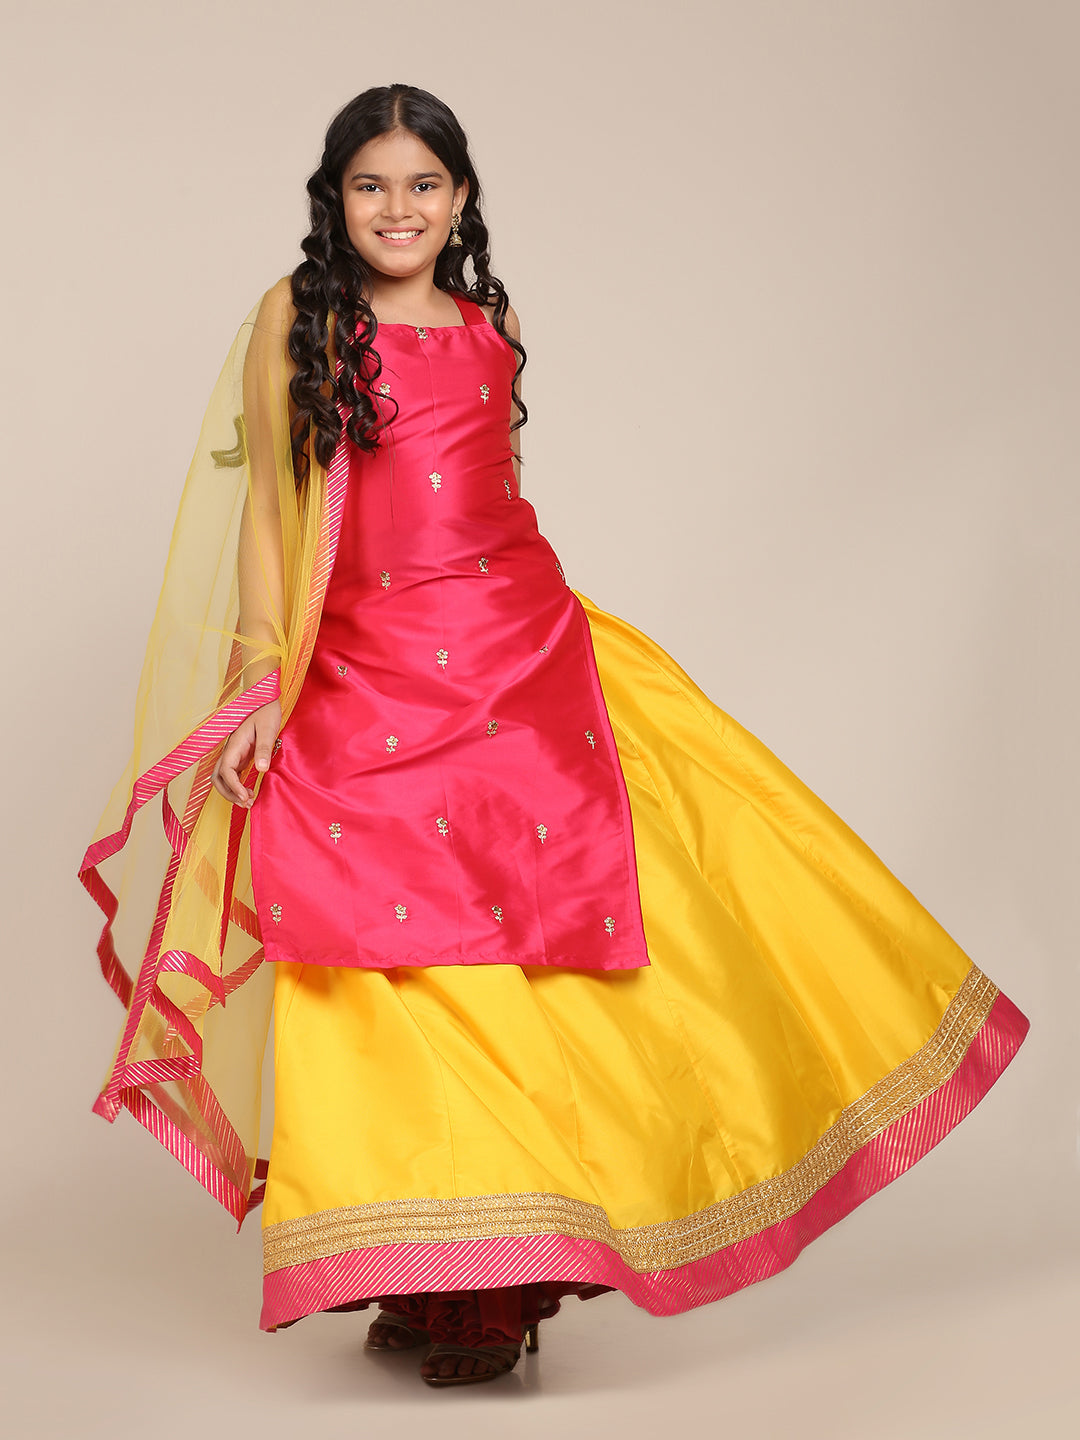 Girls Pink & Yellow Embroidered Ready To Wear Lehenga & Blouse With Dupatta - Bitiya By Bhama